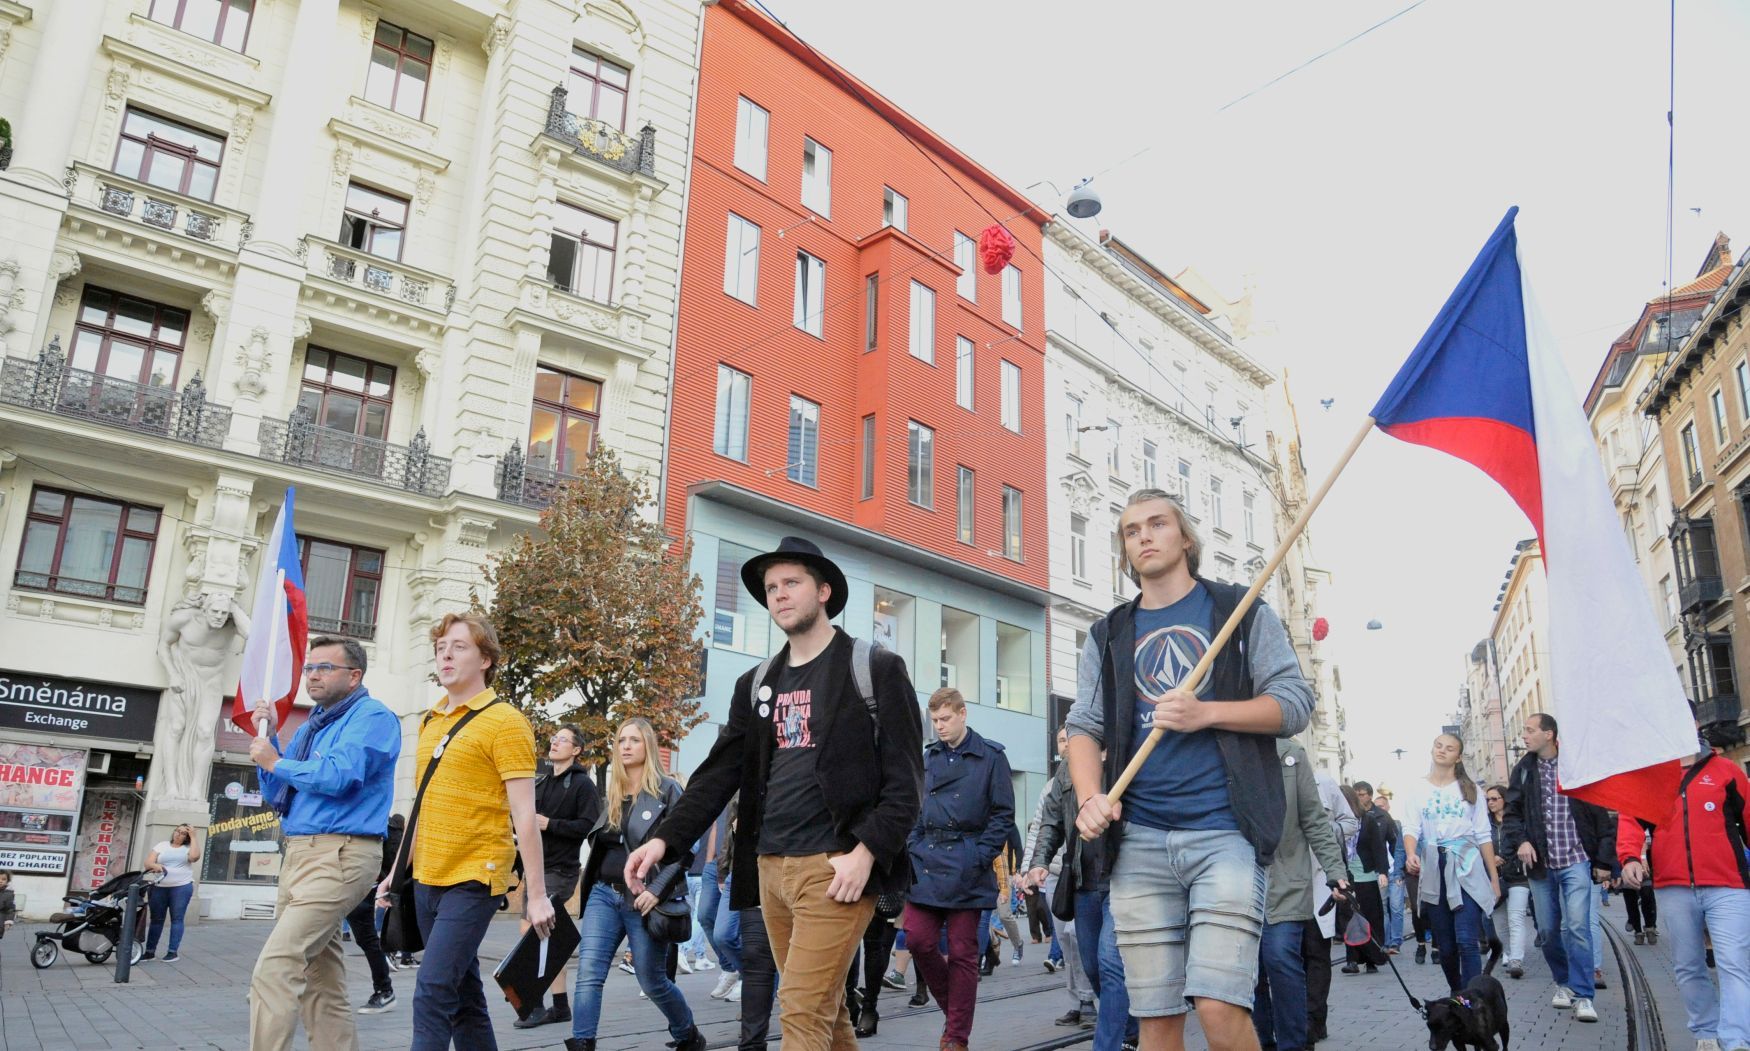 Milion chvilek pro demokracii Demonstrace Brno